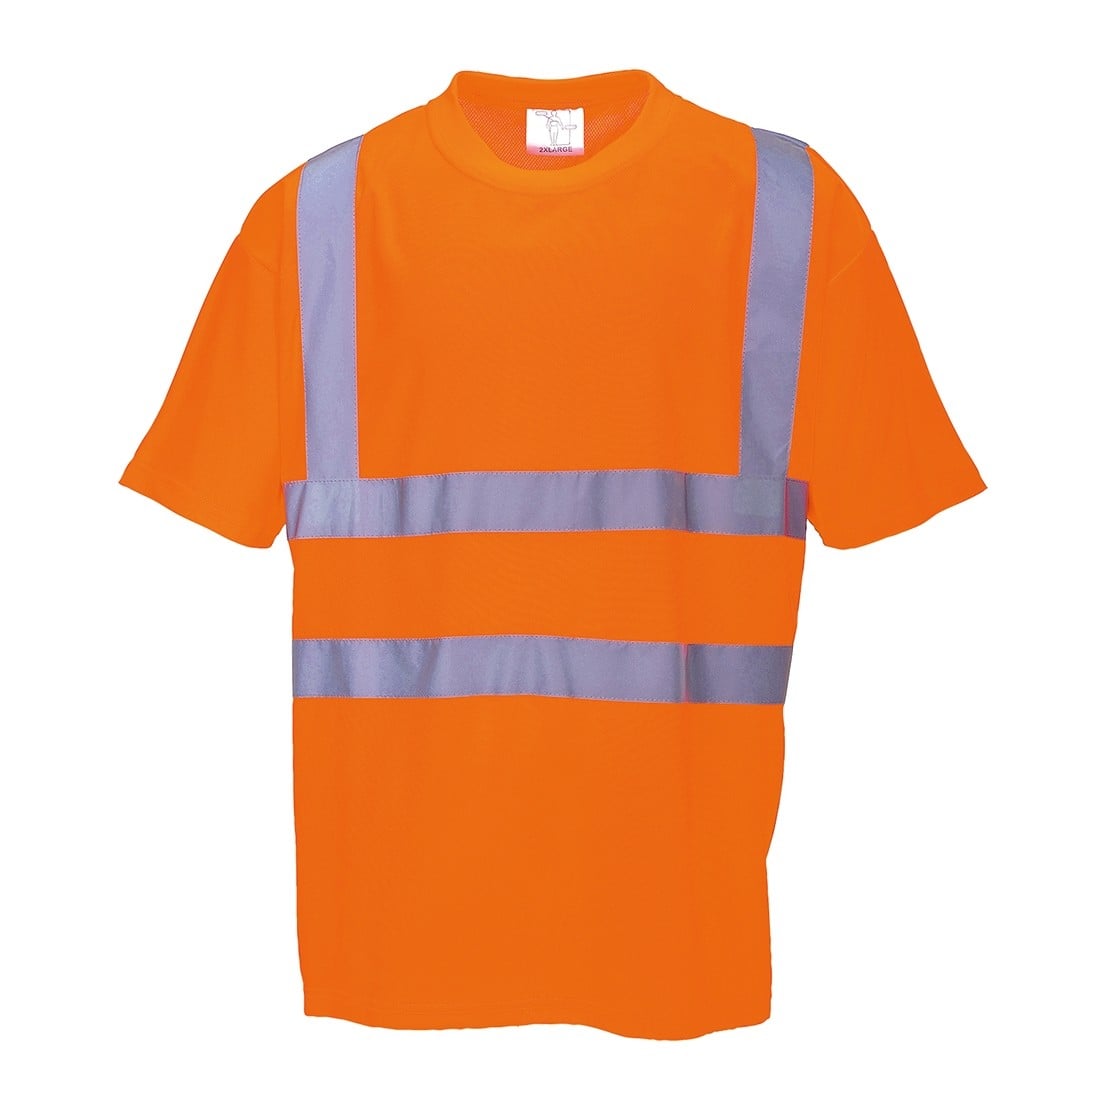 PORTWEST Hi Vis T-Shirt Short Sleeve Safety 100% Polyester Breathable S478